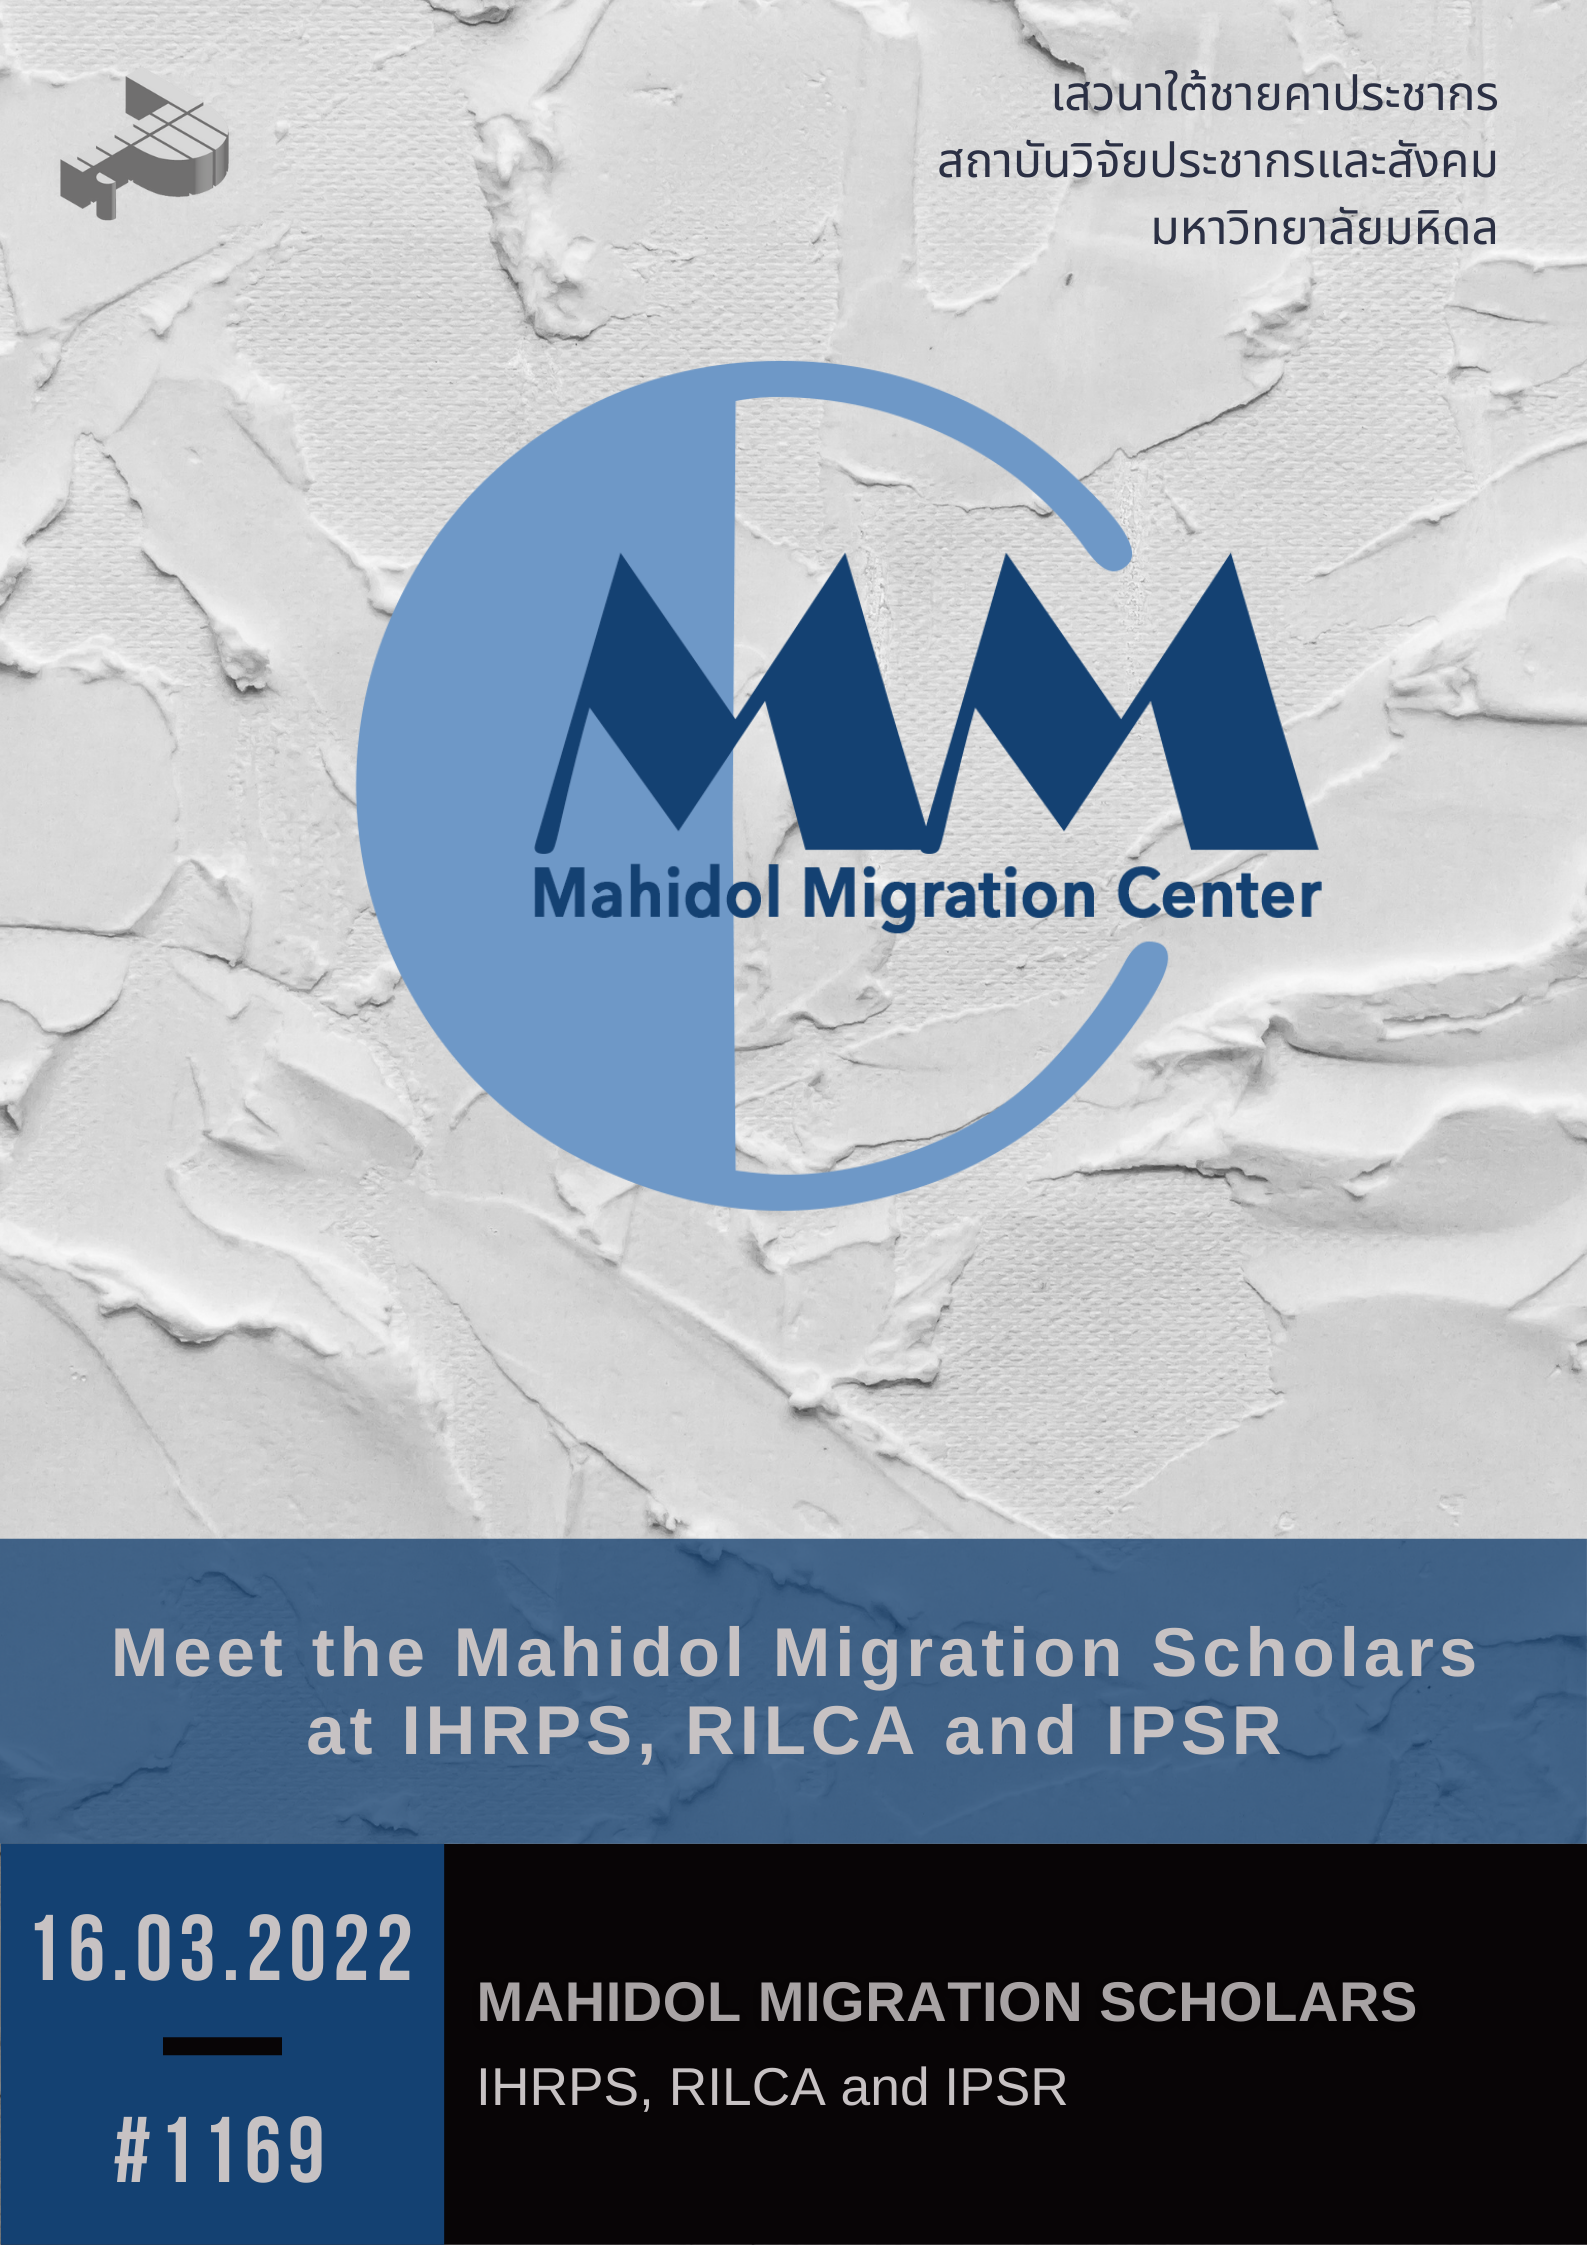 Meet Mahidol Migration Scholars from IHRPS, RILCA and IPSR